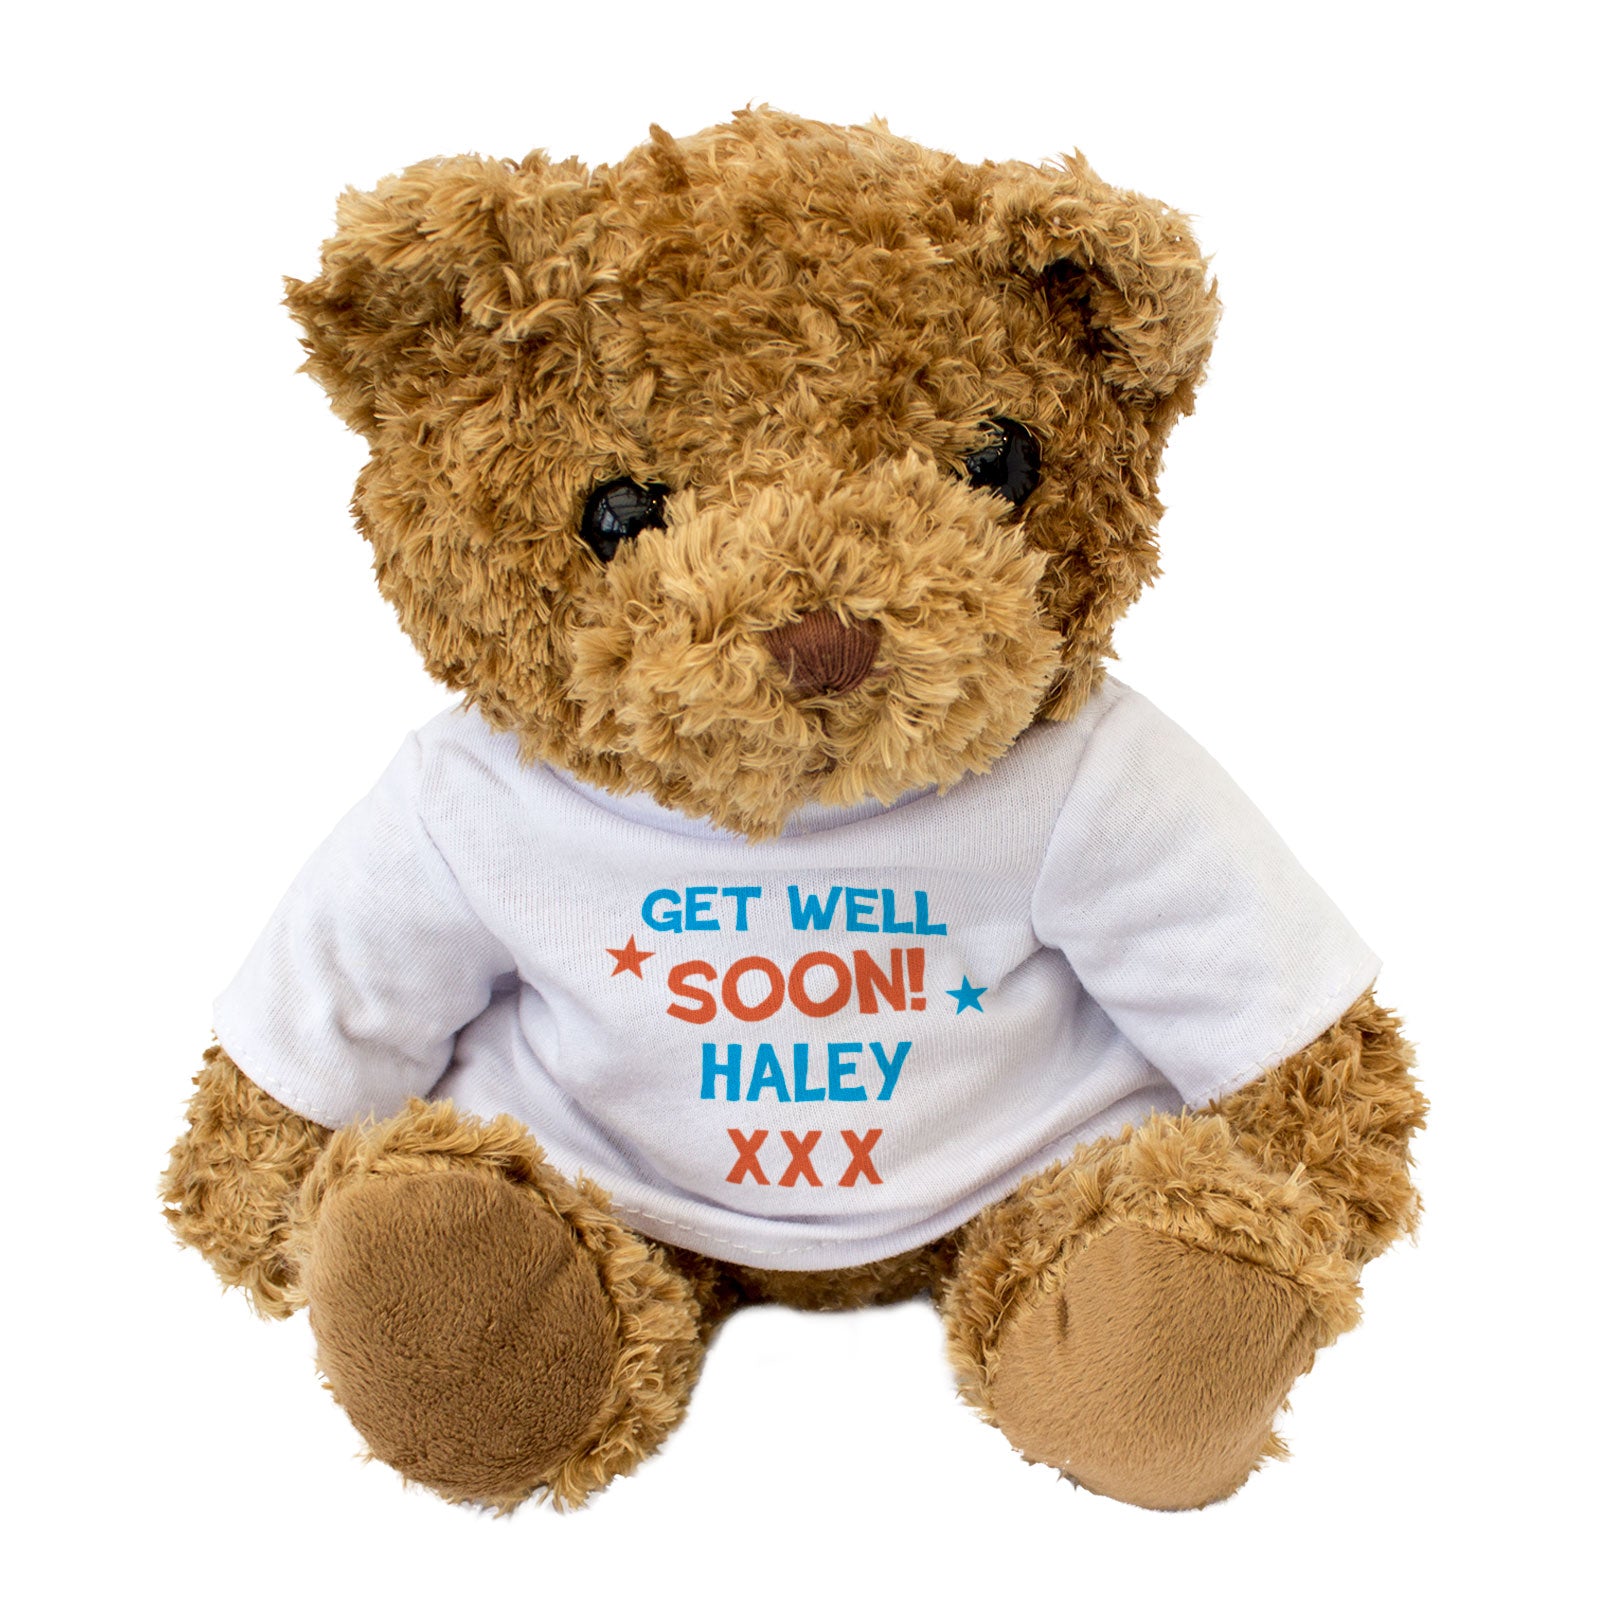 Get Well Soon Haley - Teddy Bear